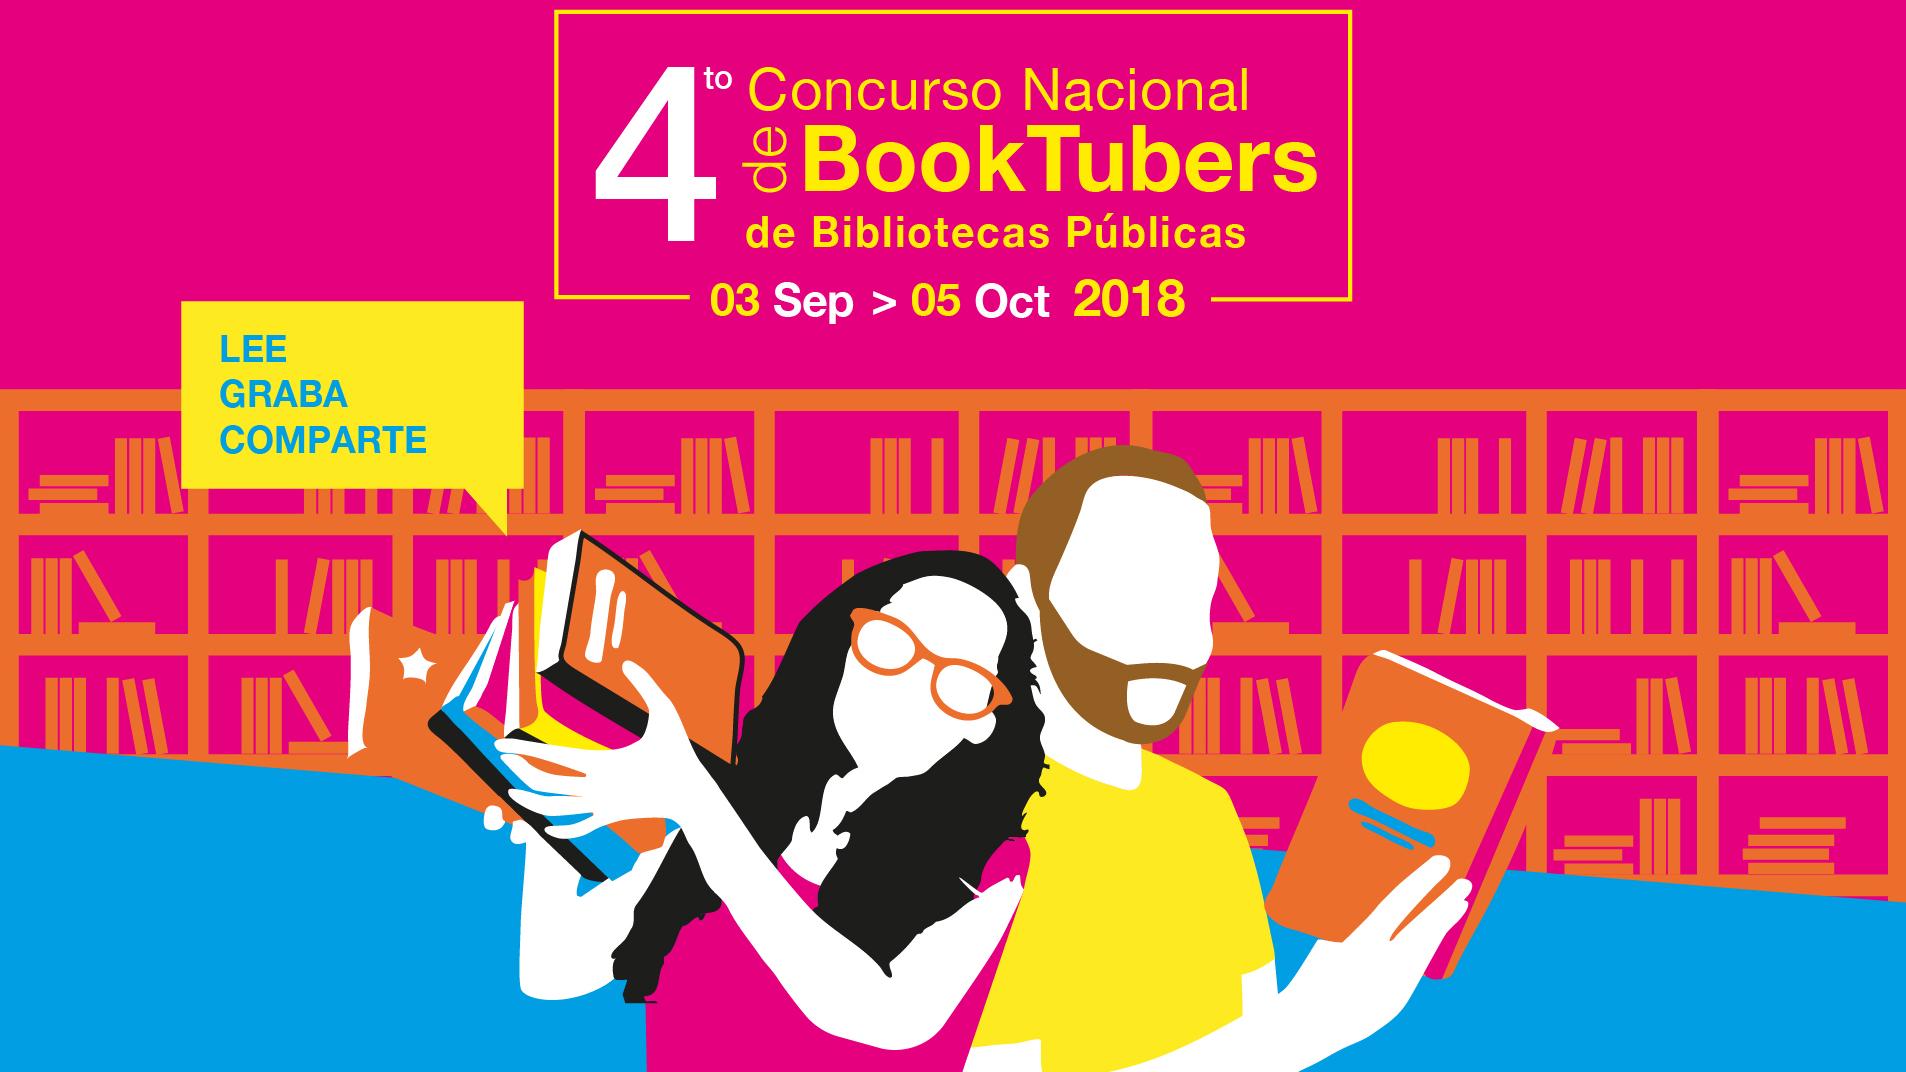 Bibliotecas públicas anuncian "4° Concurso Nacional de Booktubers"